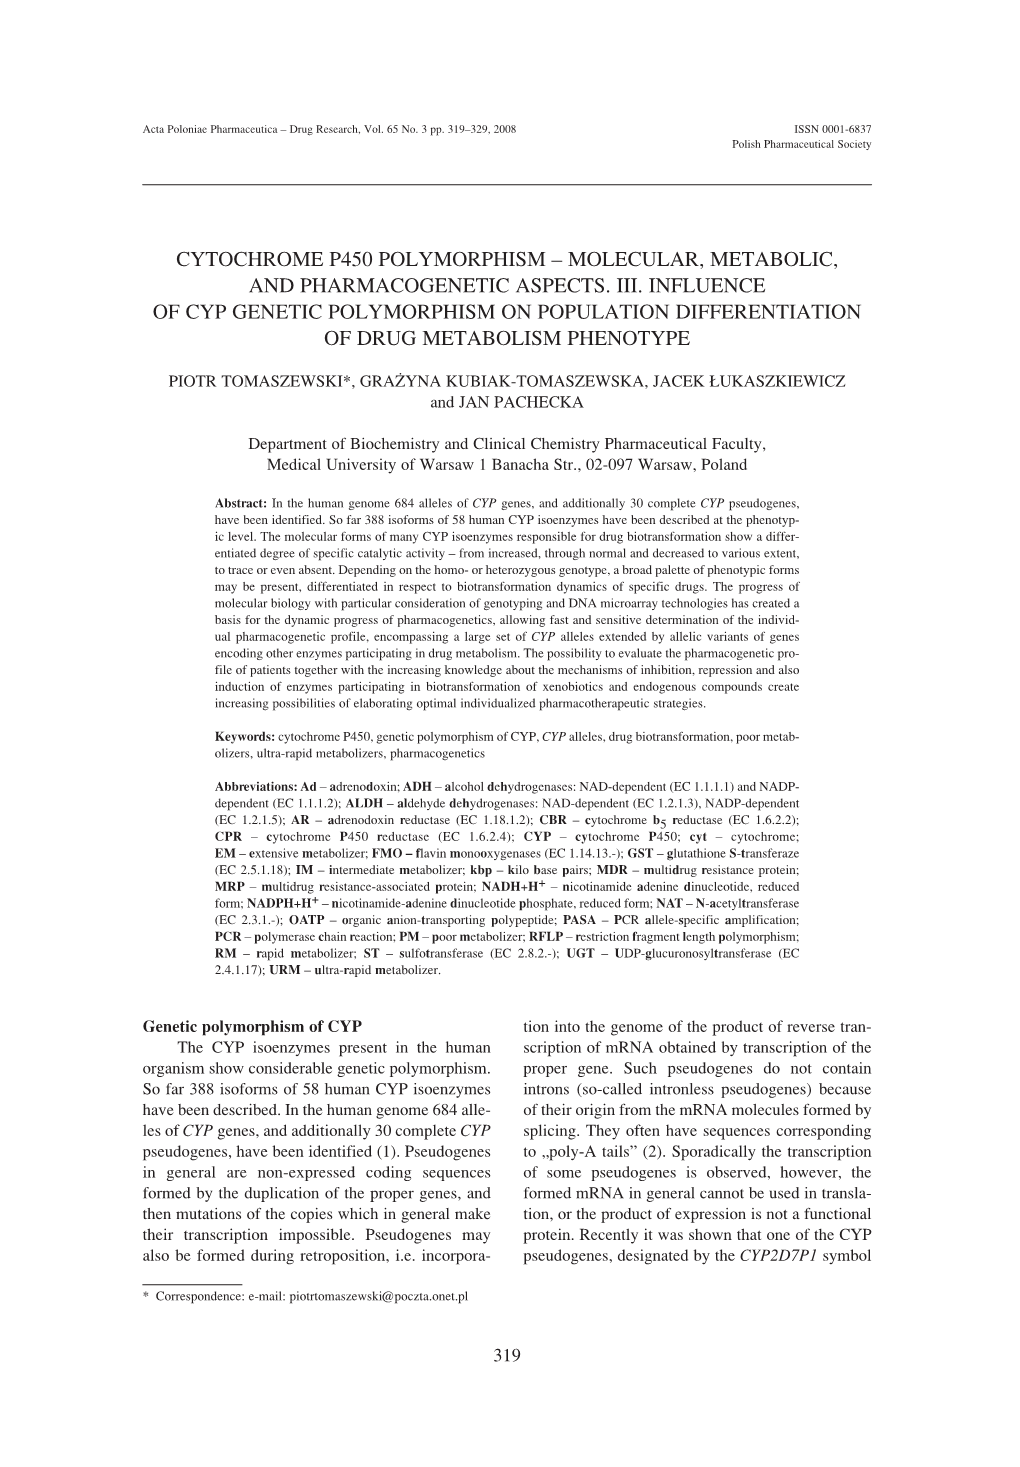 Cytochrome P450 Polymorphism Ñ Molecular, Metabolic, and Pharmacogenetic Aspects